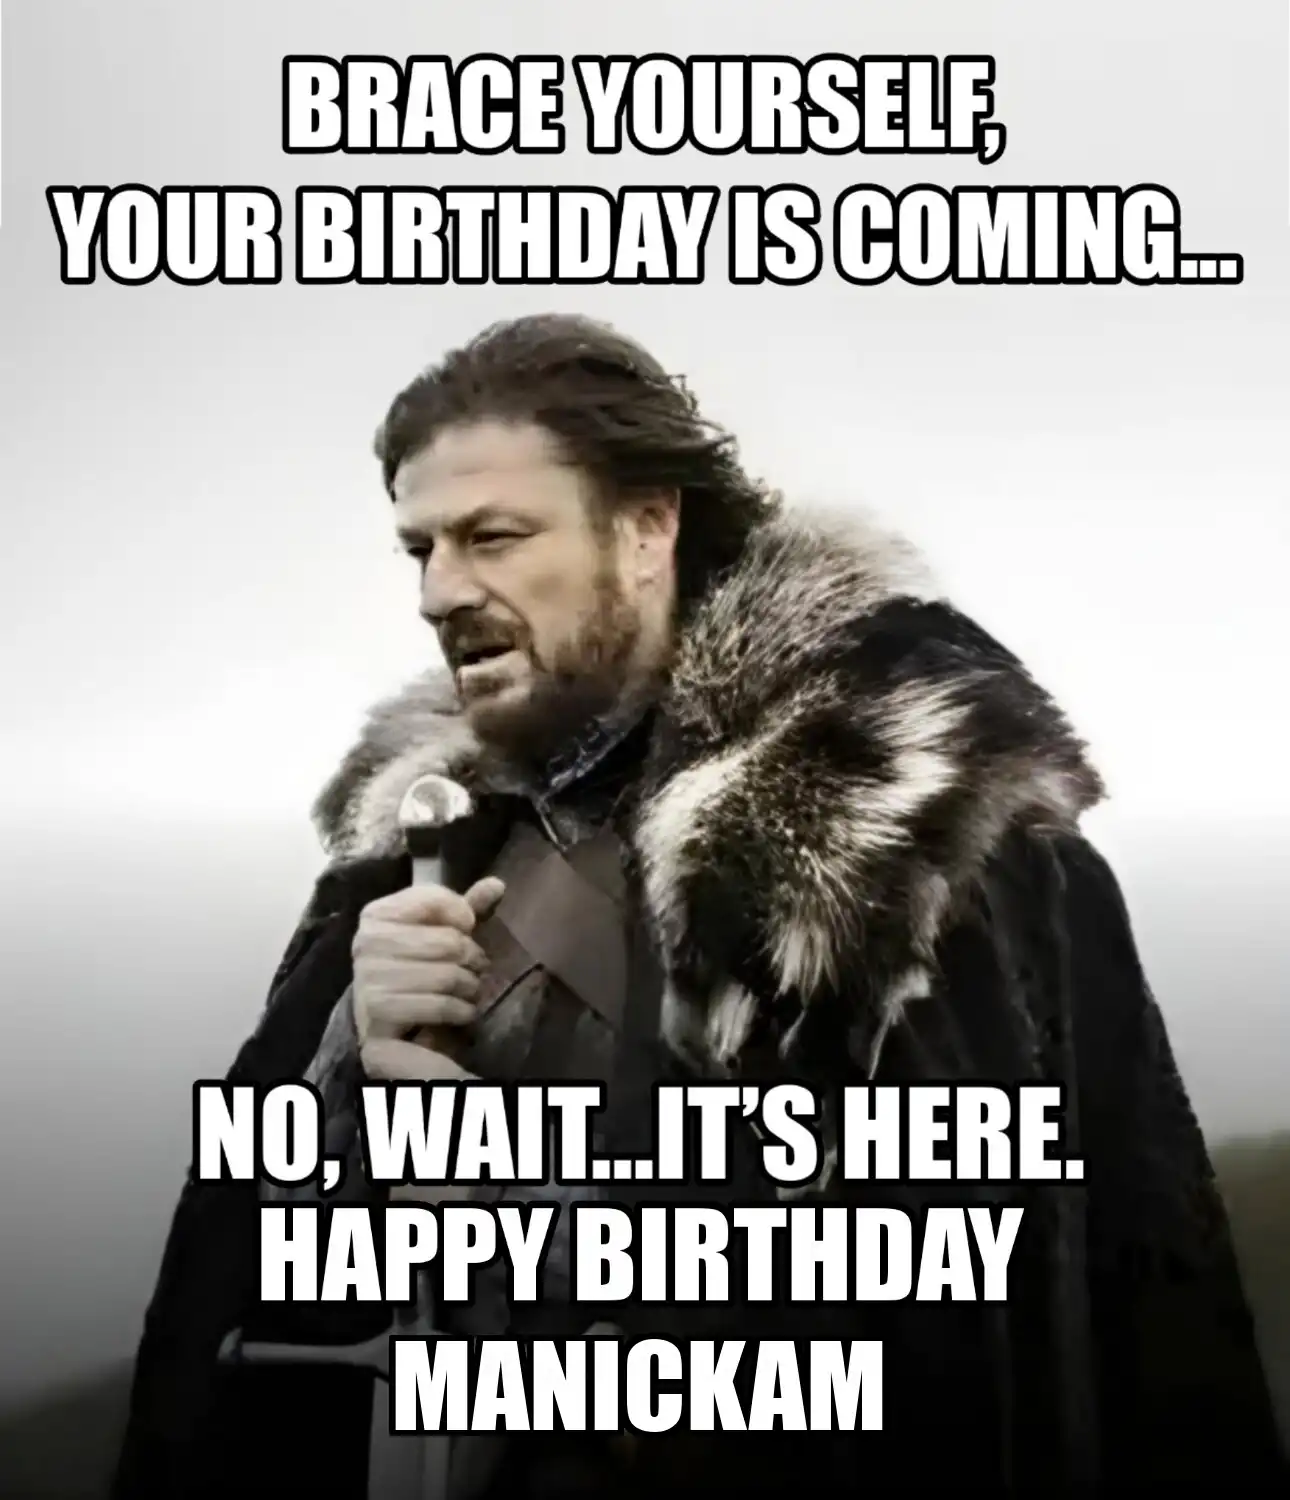 Happy Birthday Manickam Brace Yourself Your Birthday Is Coming Meme